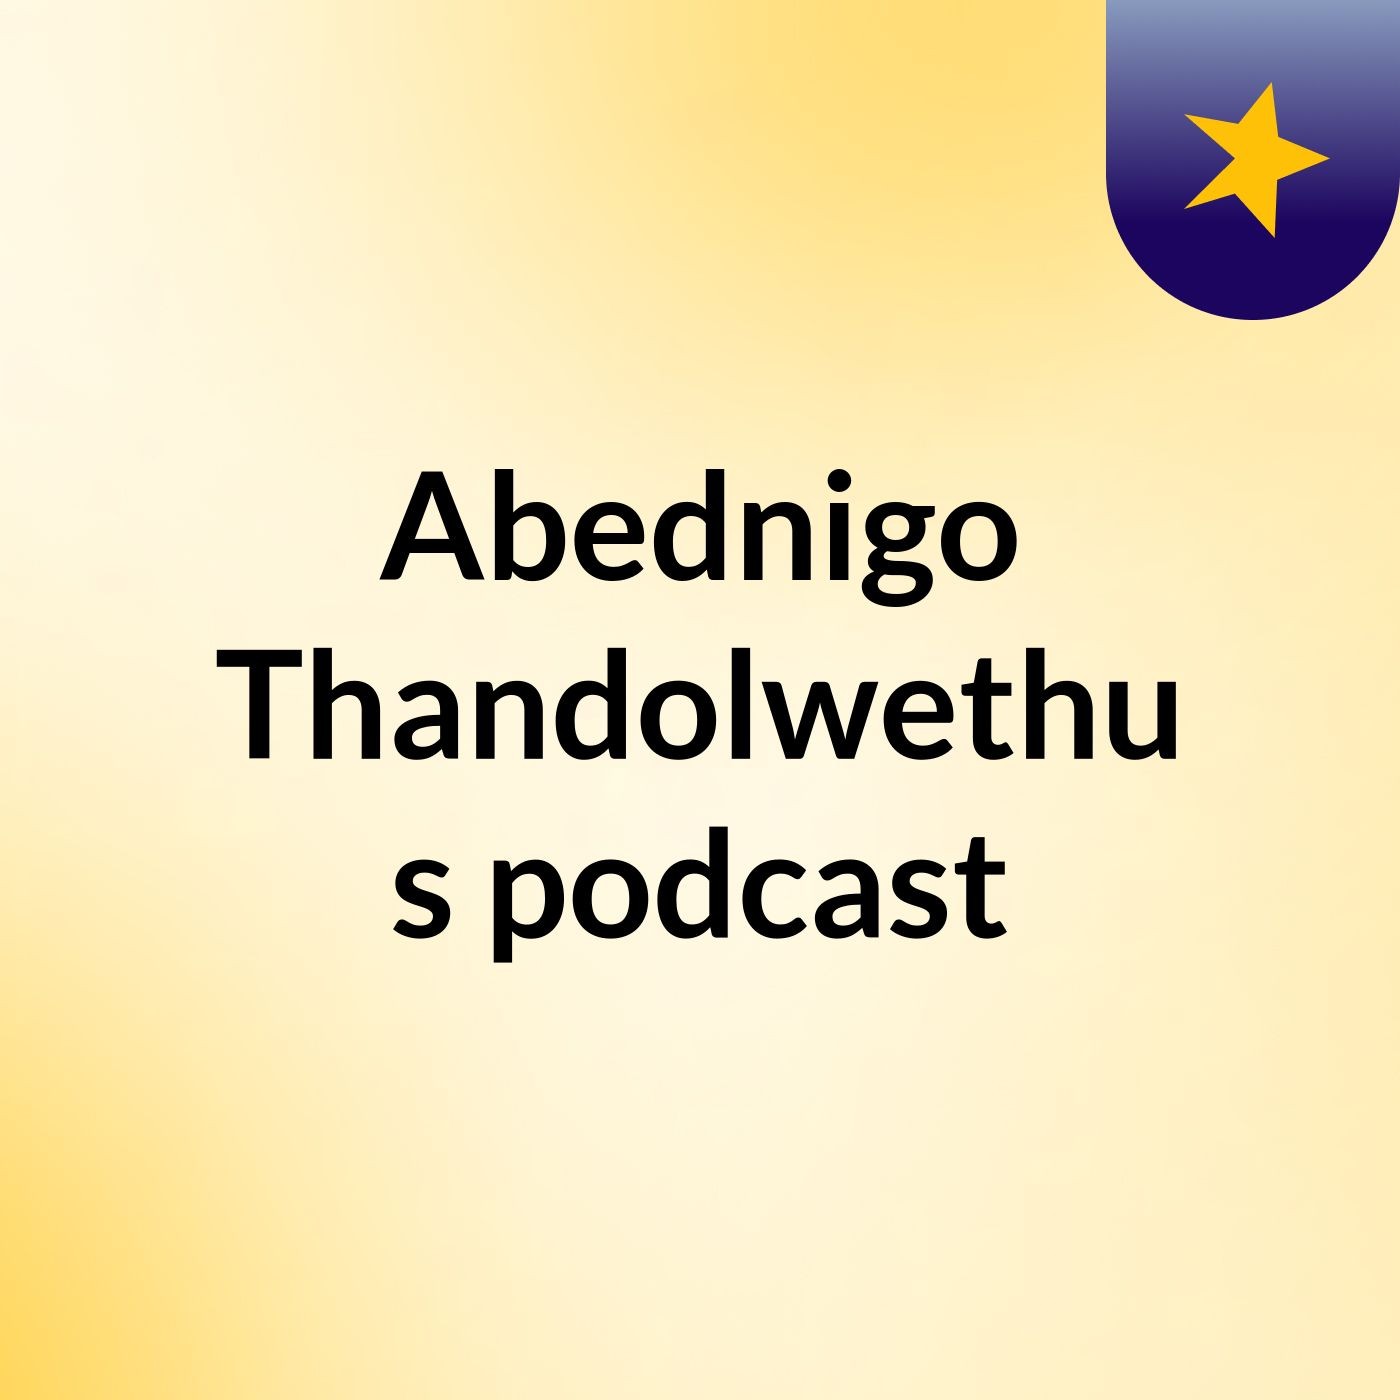 Abednigo Thandolwethu's podcast